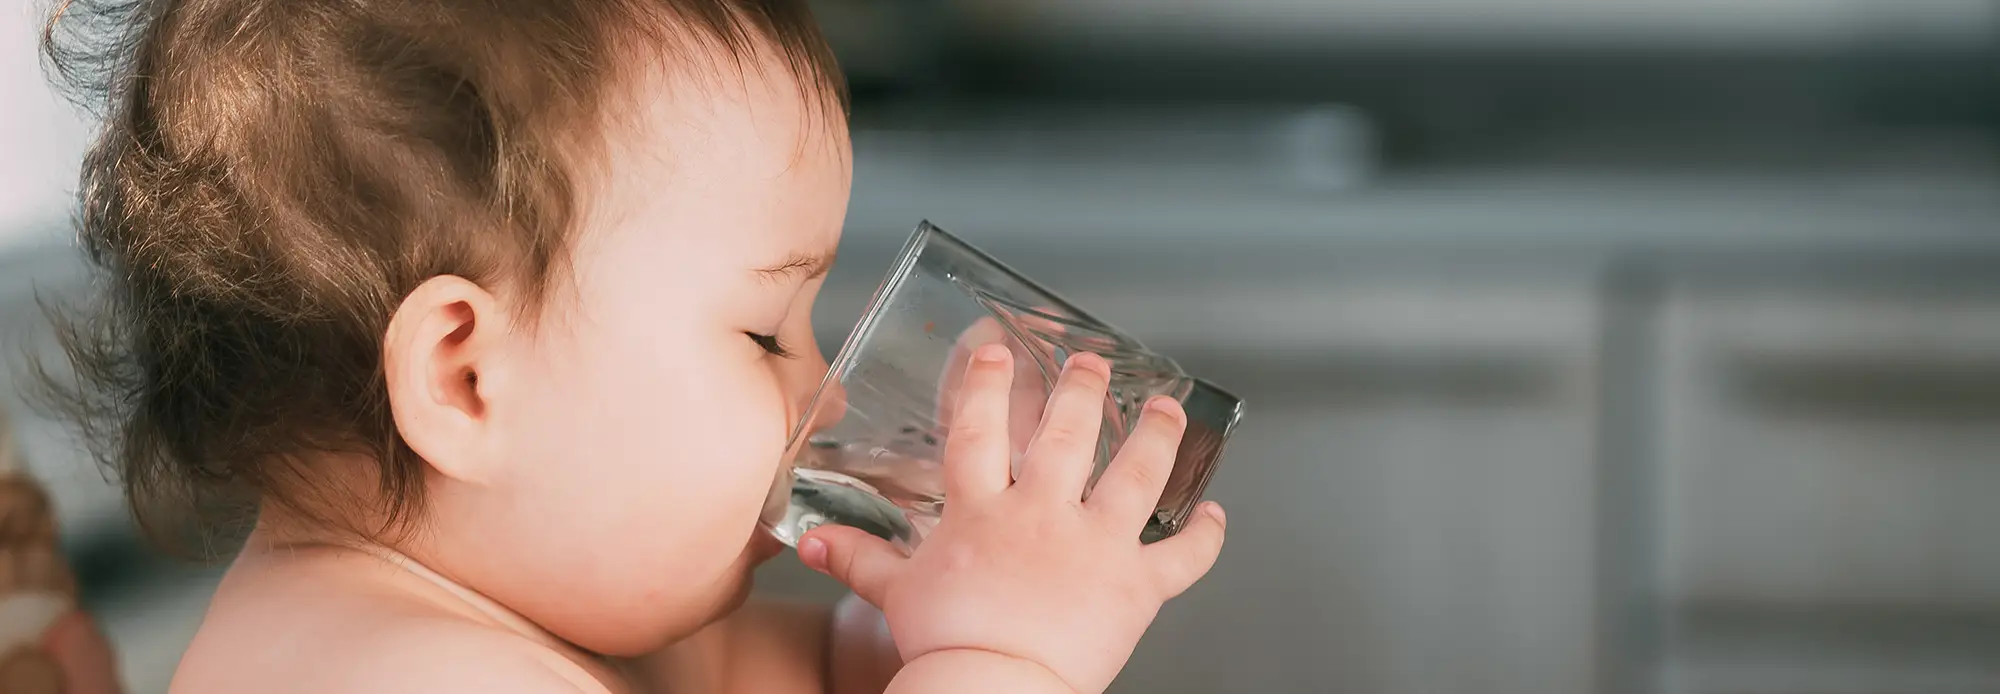 Cuándo dar agua a un bebé?